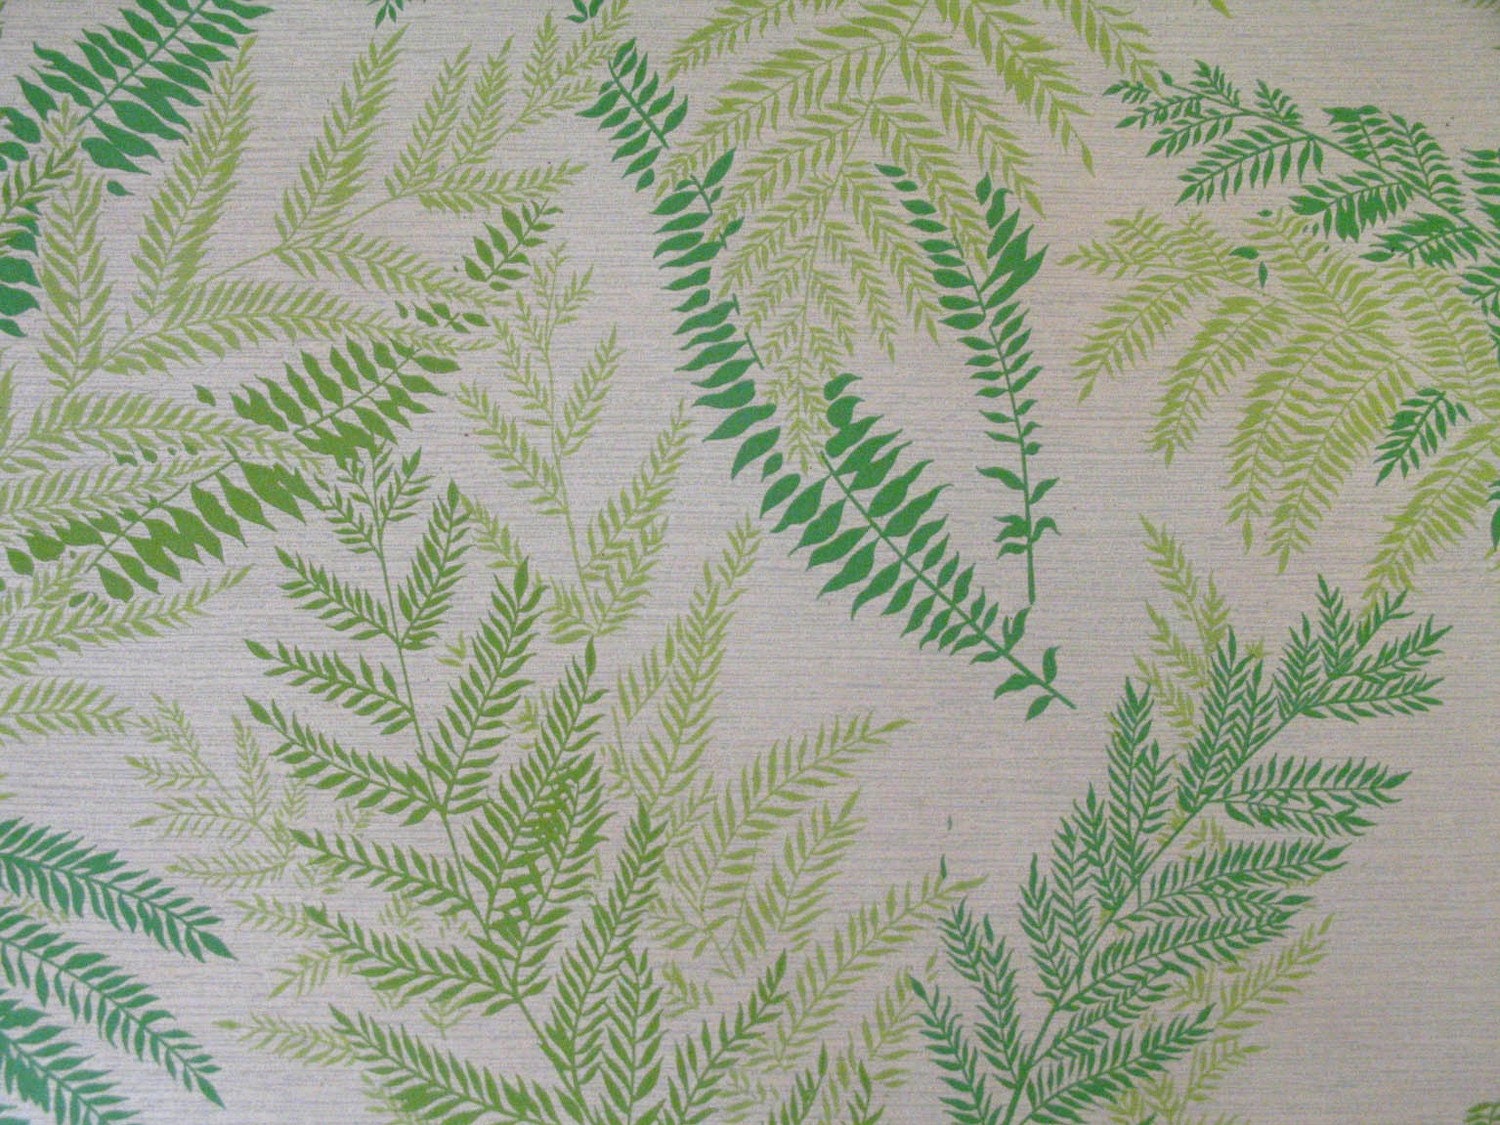 Vintage Fern Leaf Wallpaper Green Silhouette HD Wallpapers Download Free Map Images Wallpaper [wallpaper376.blogspot.com]